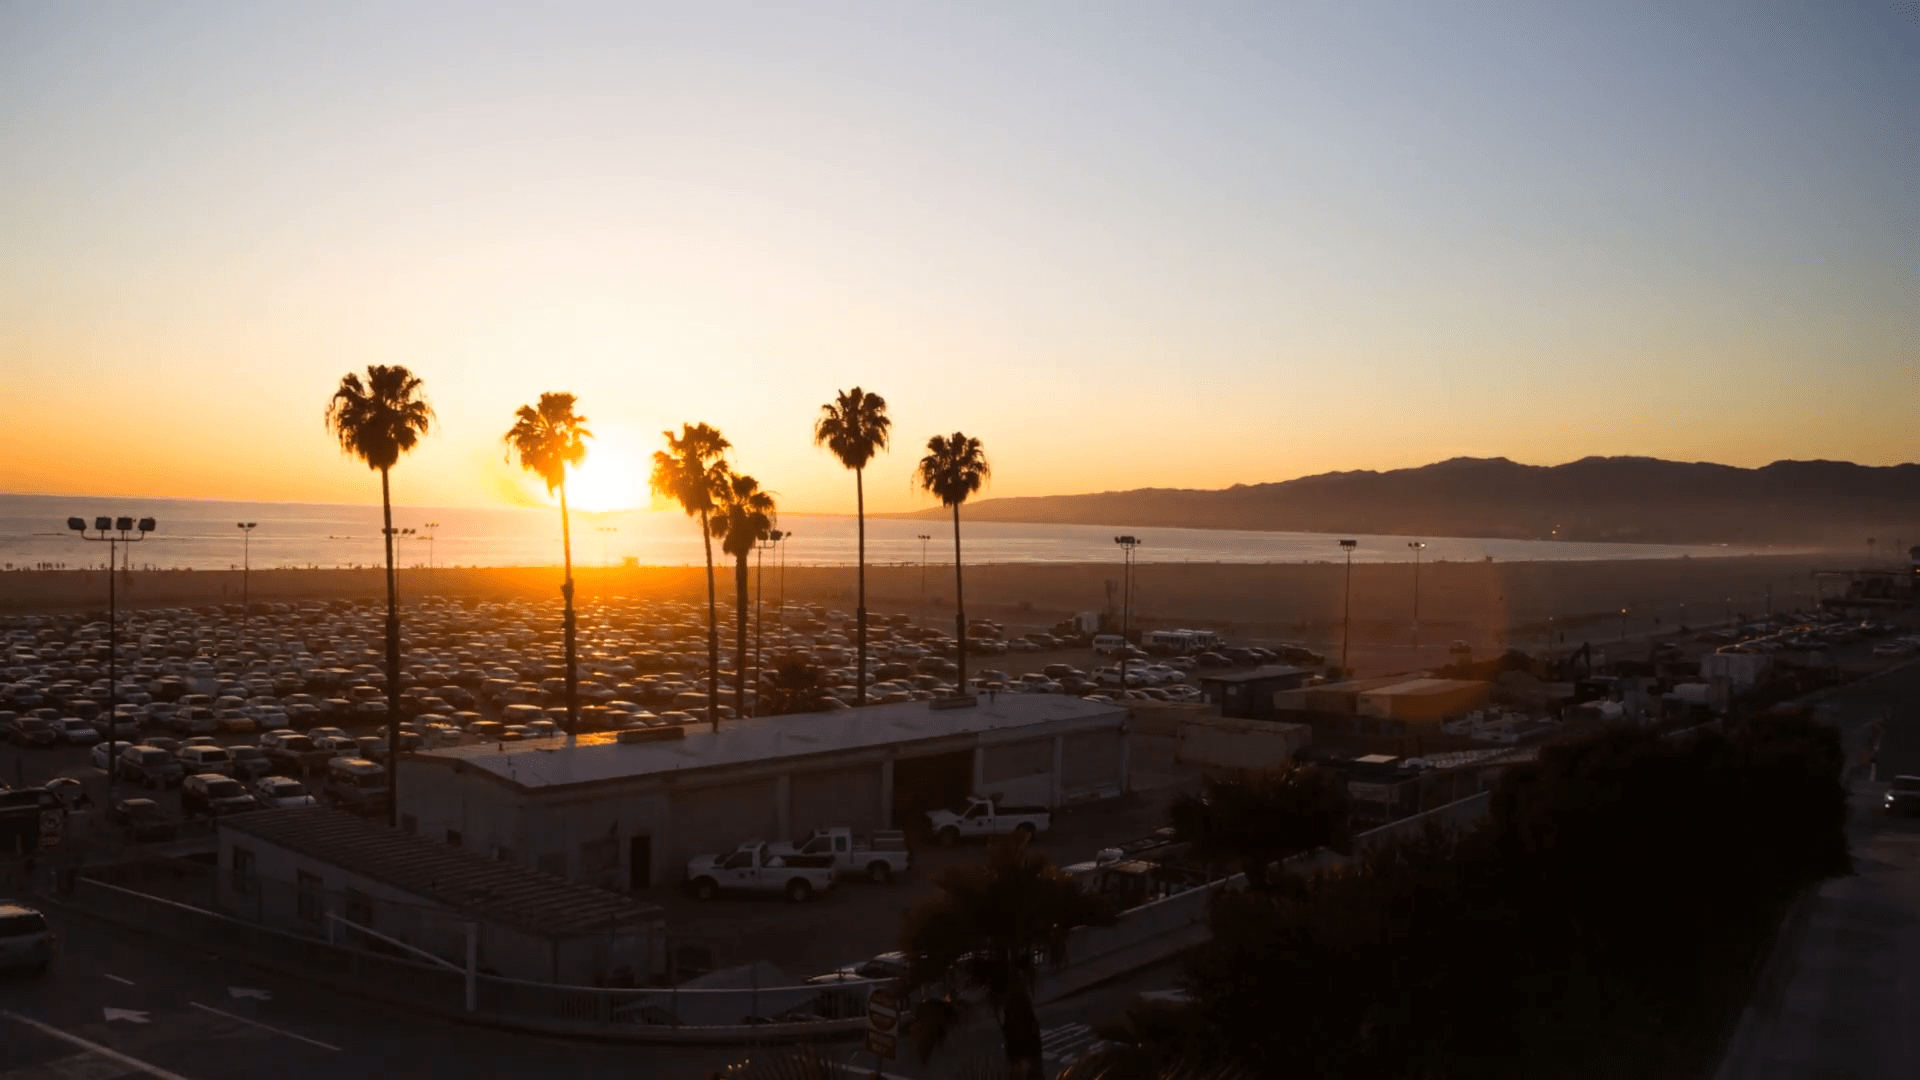 100 Santa Monica Pier Pictures  Download Free Images on Unsplash